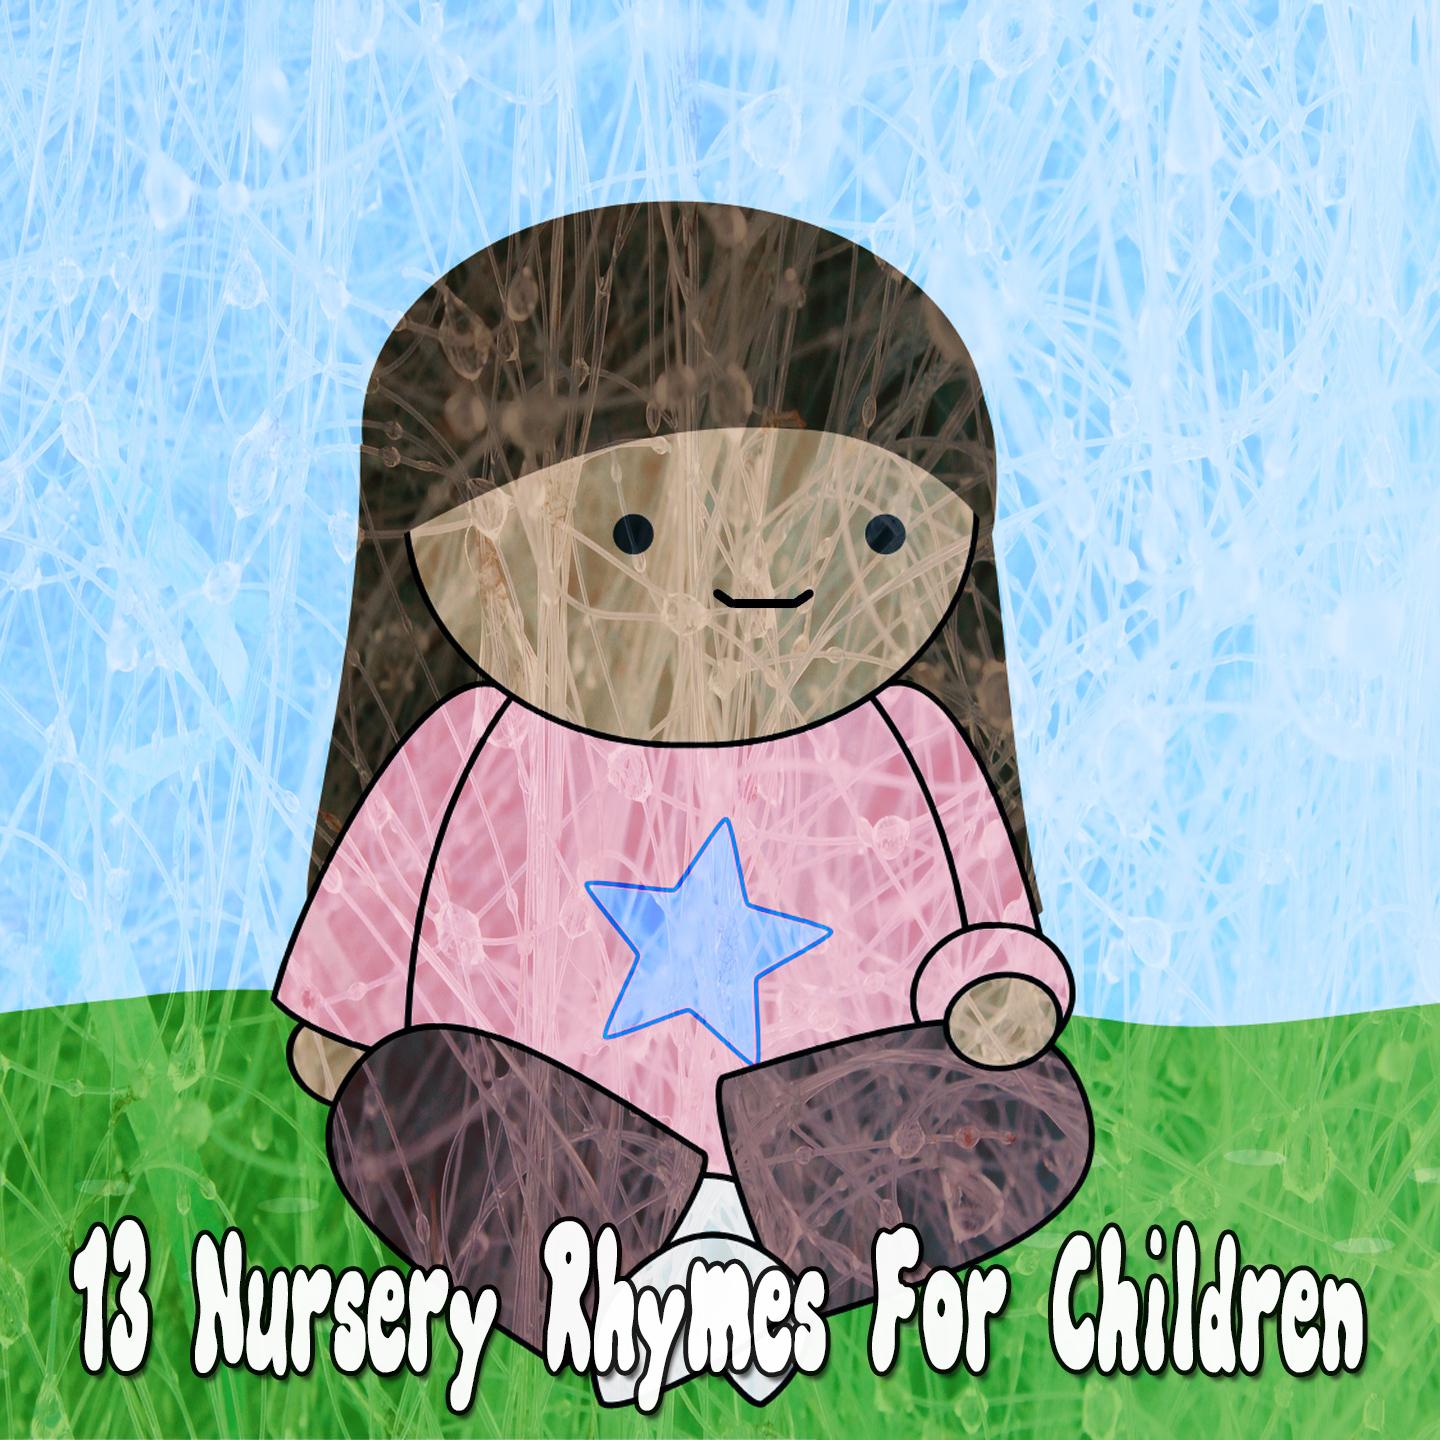 13 Nursery Rhymes for Children